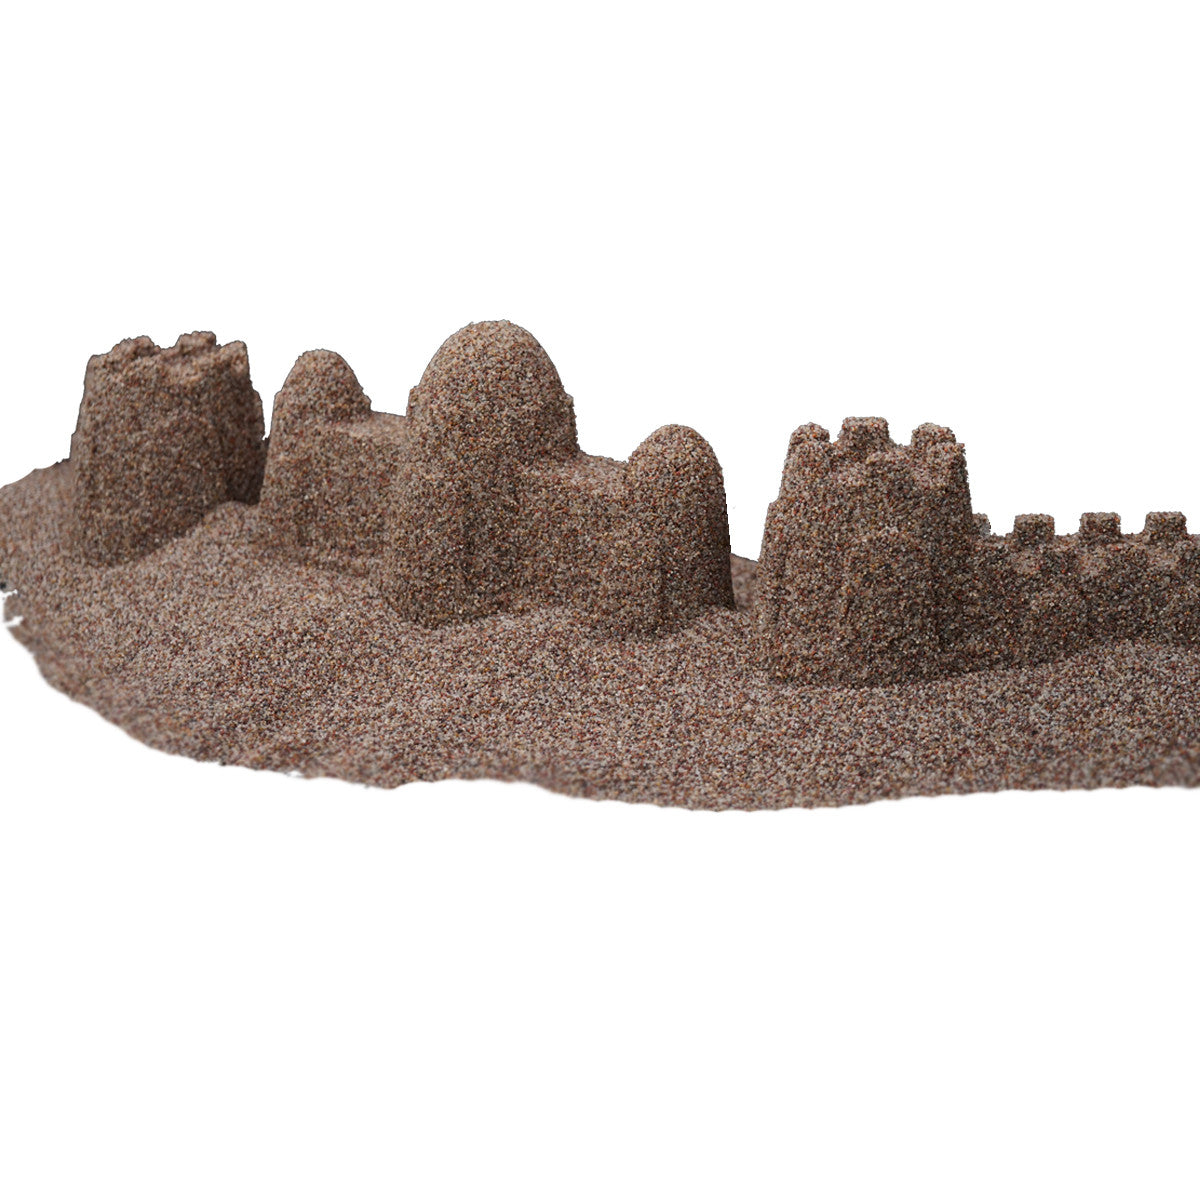 Original Jurassic Play Sand  Orange Play Sand – JURASSIC SANDS